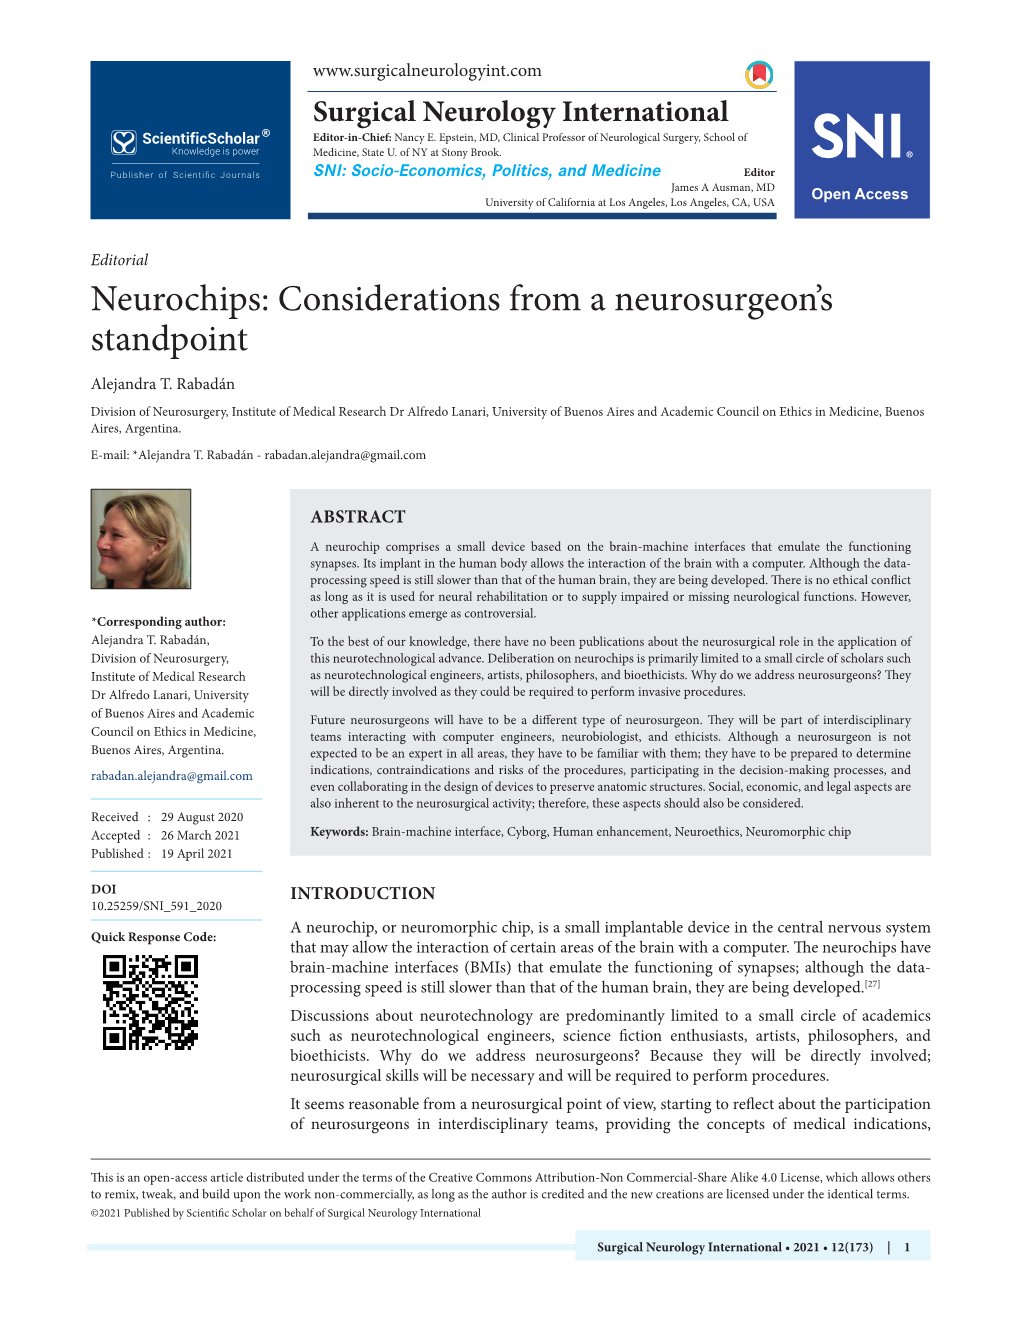 Neurochips: Considerations from a Neurosurgeon’S Standpoint Alejandra T